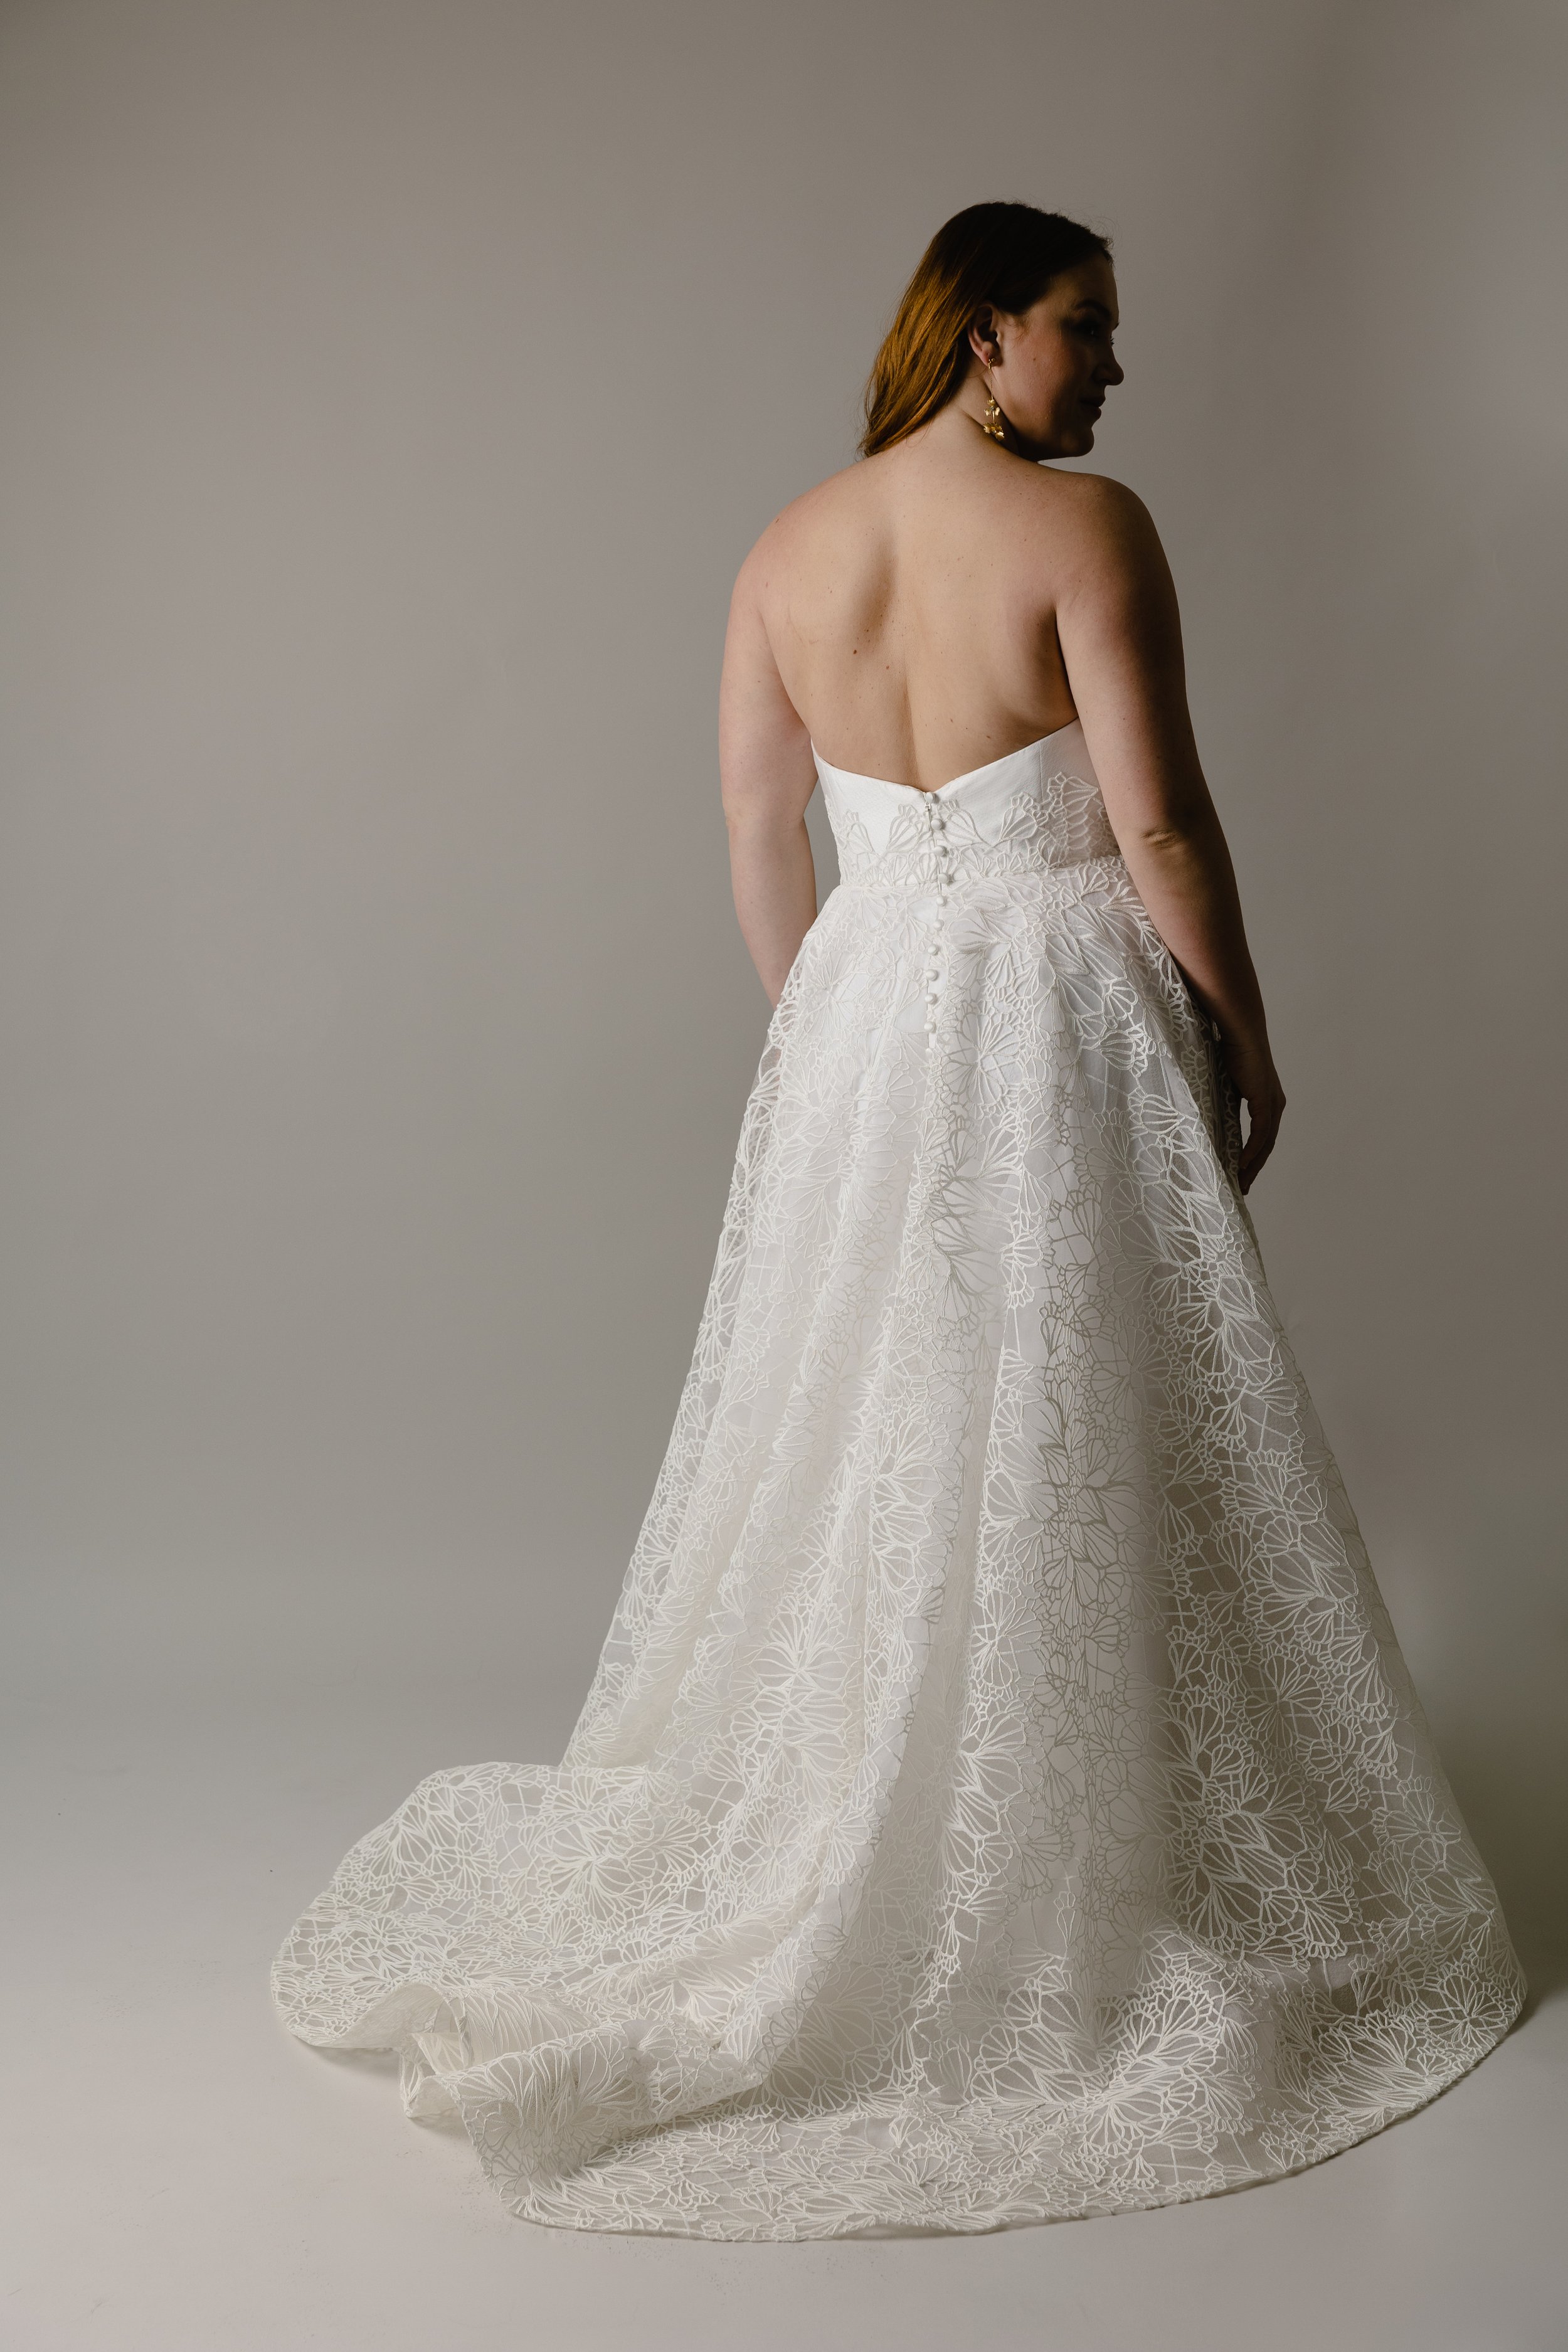 Harlow geometric lace textured wedding dress size 20 web.jpg